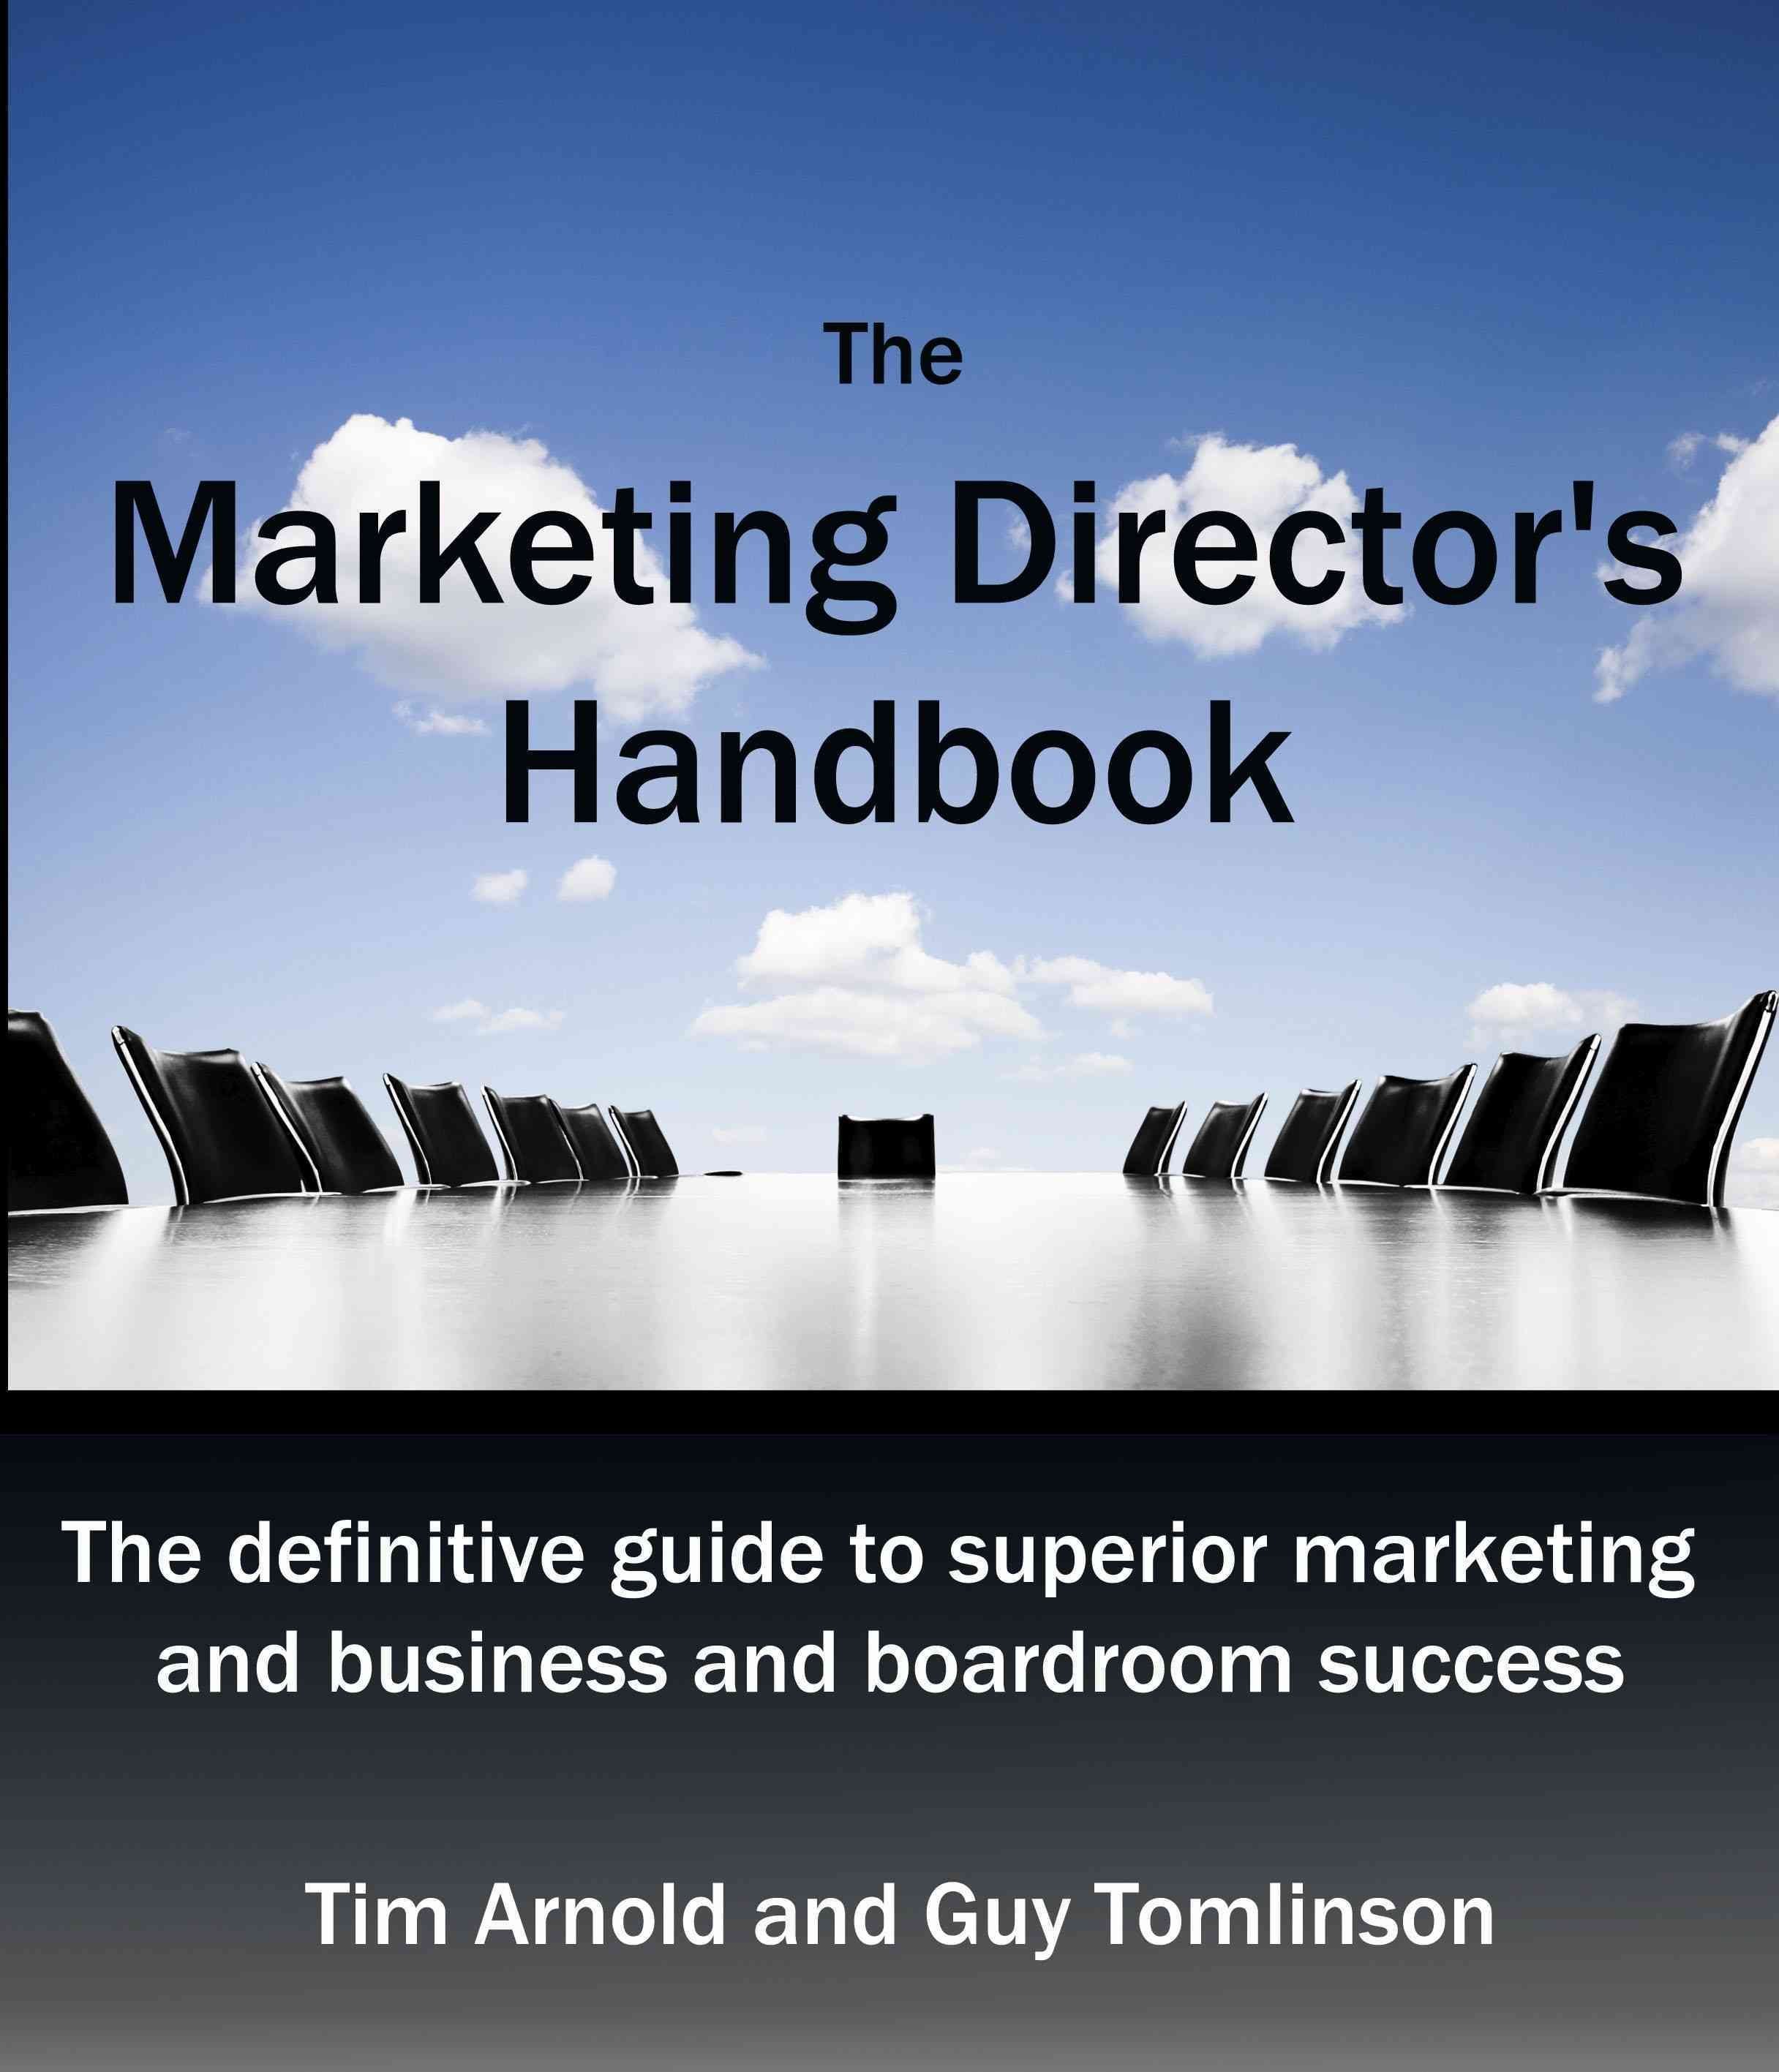 The Marketing Director's Handbook: Volume 1